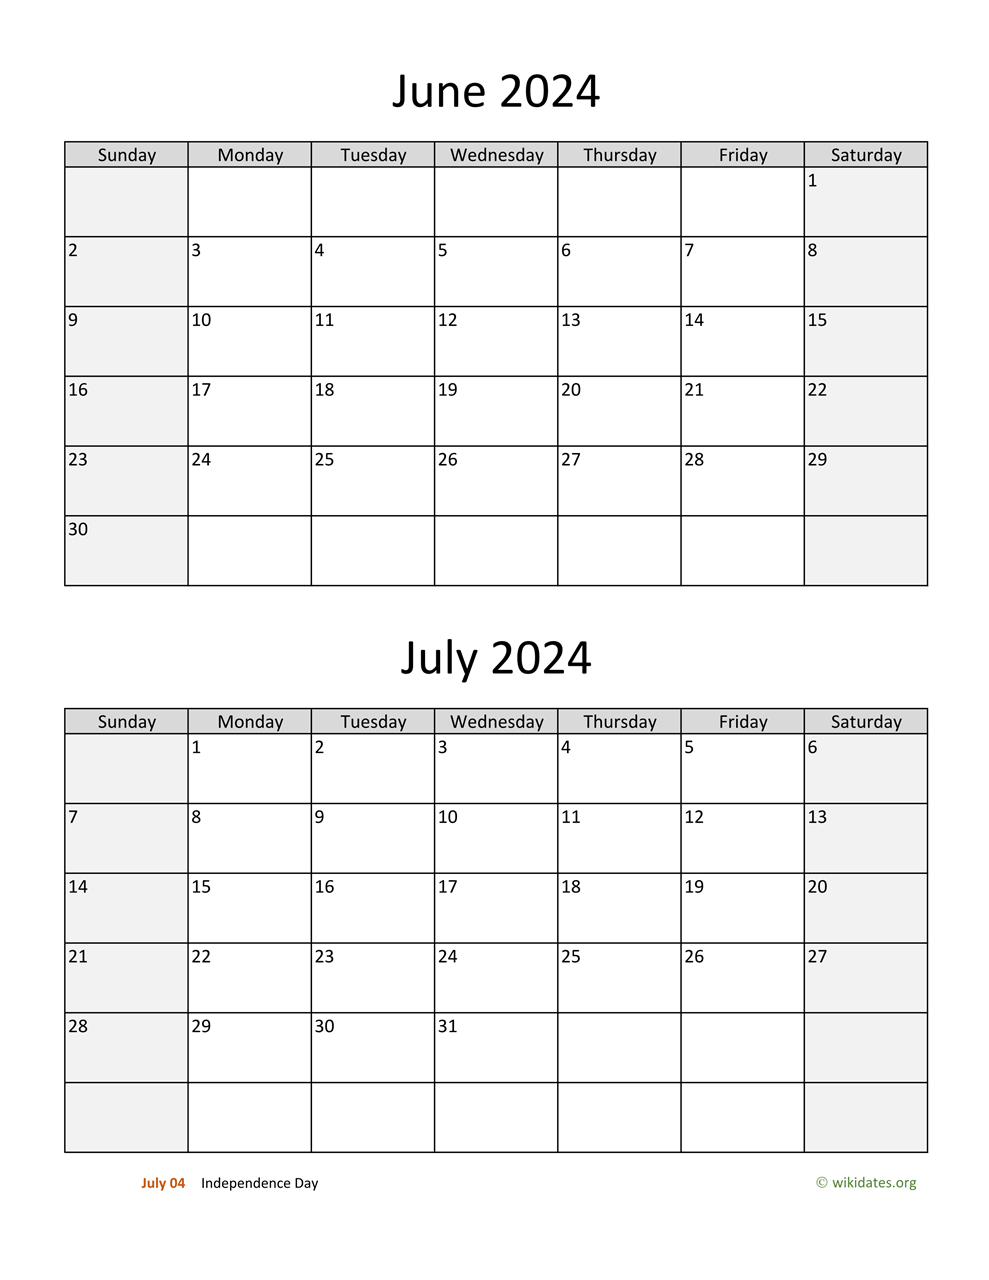 June And July 2024 Calendar | Wikidates for June/July 2024 Printable Calendar